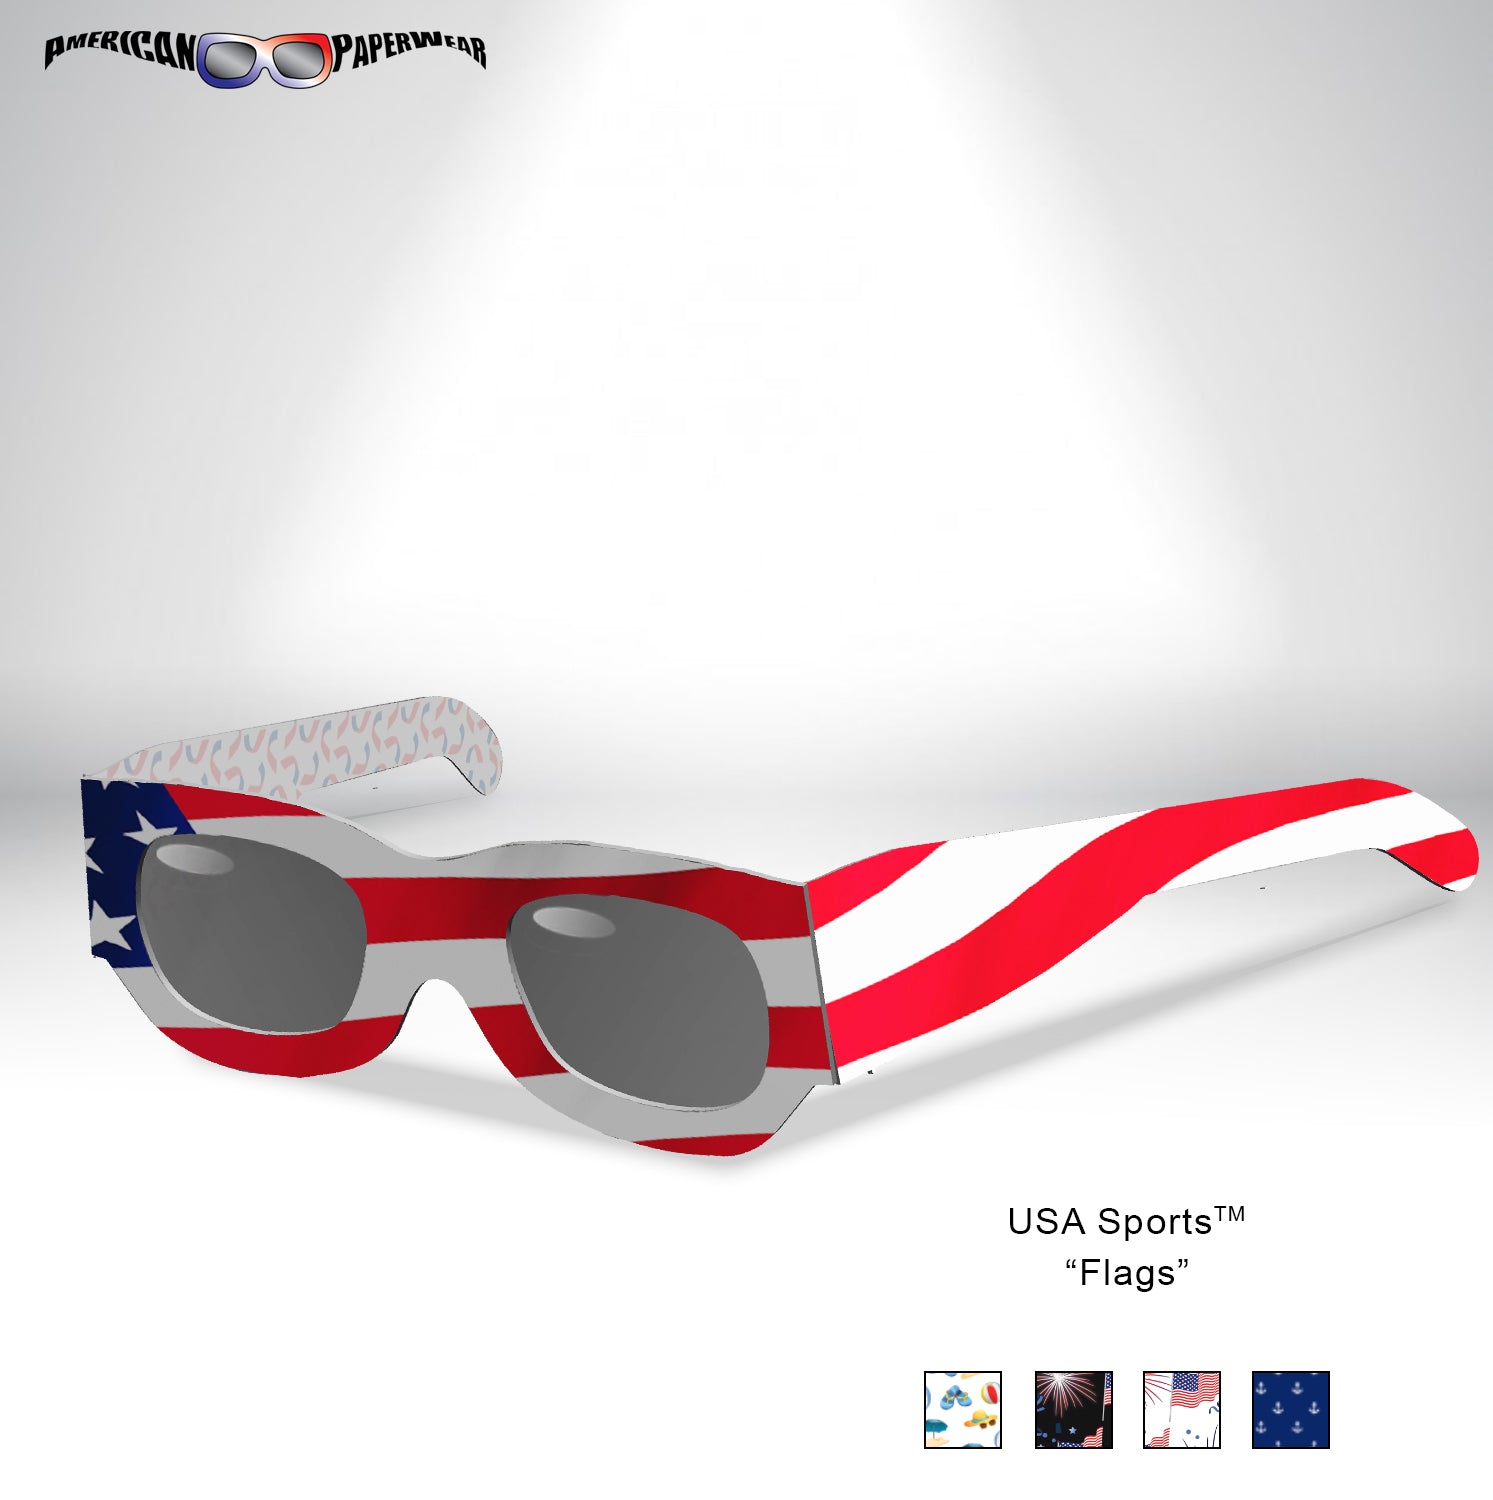 USA Sports - American Paperwear